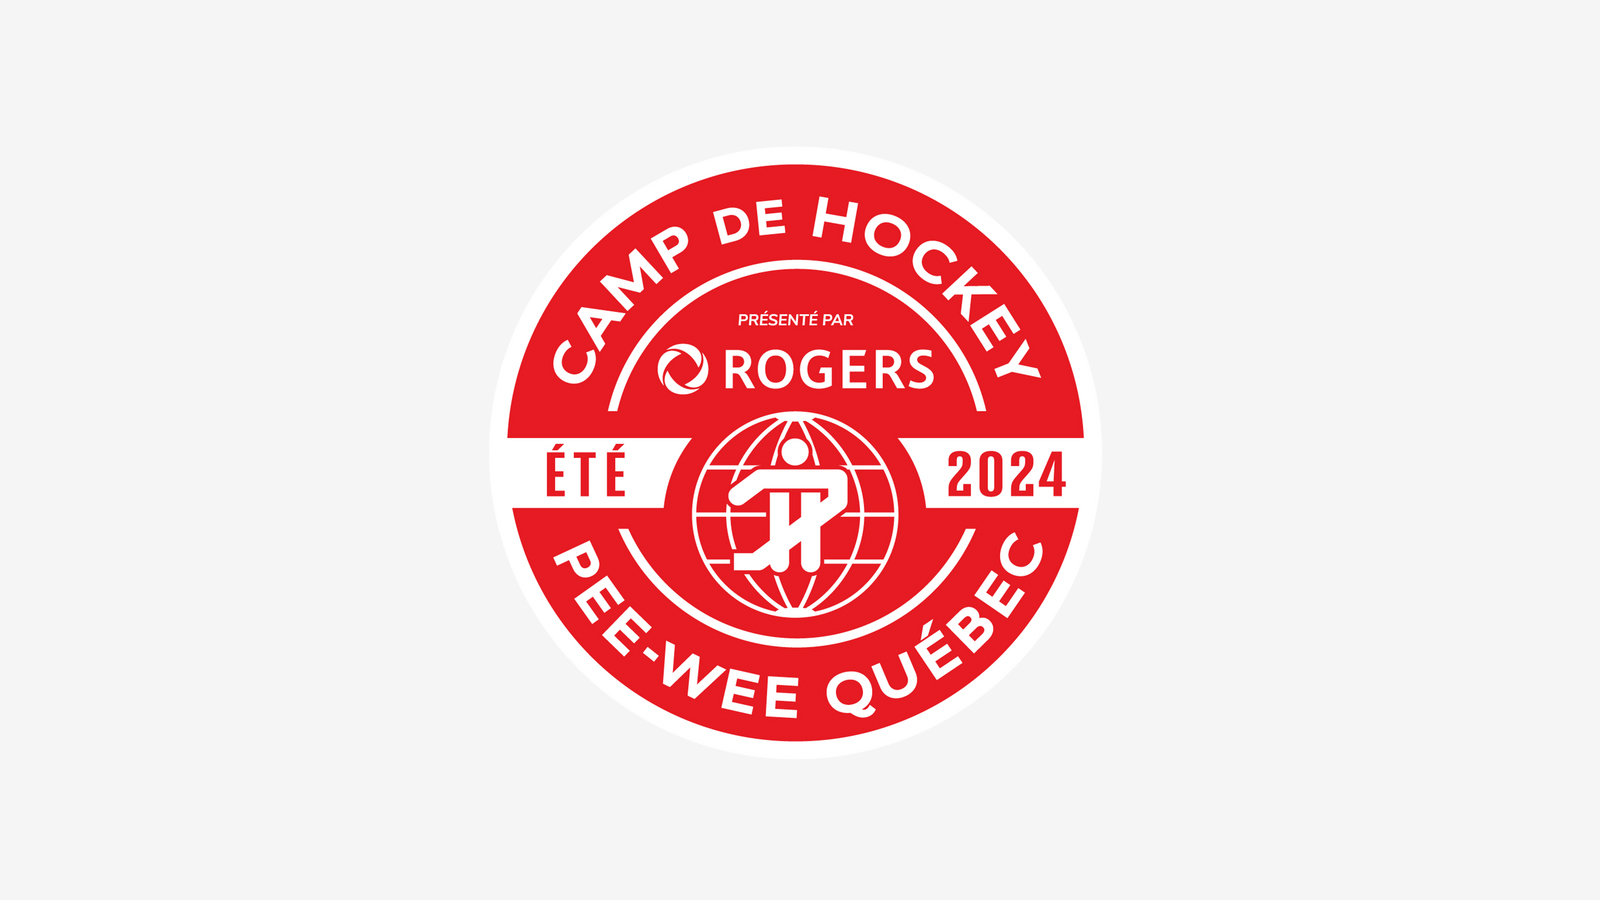 Rogers présentera le camp de hockey estival du Tournoi International de Hockey Pee-Wee de Québec